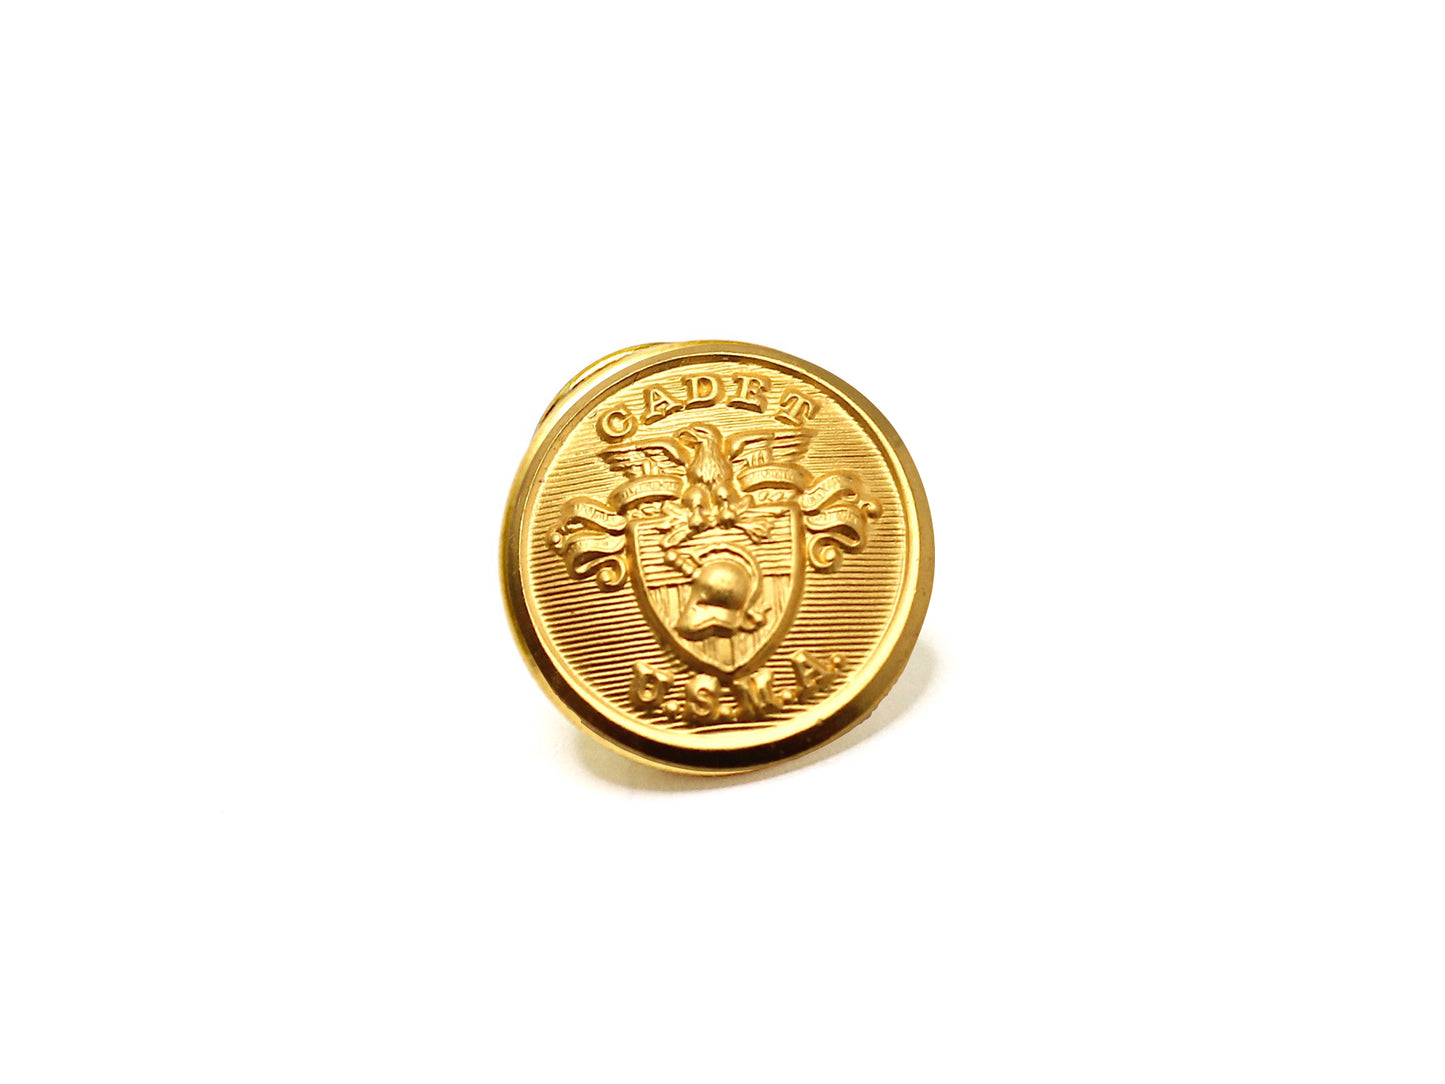 USMA Cadet Button Lapel Pin